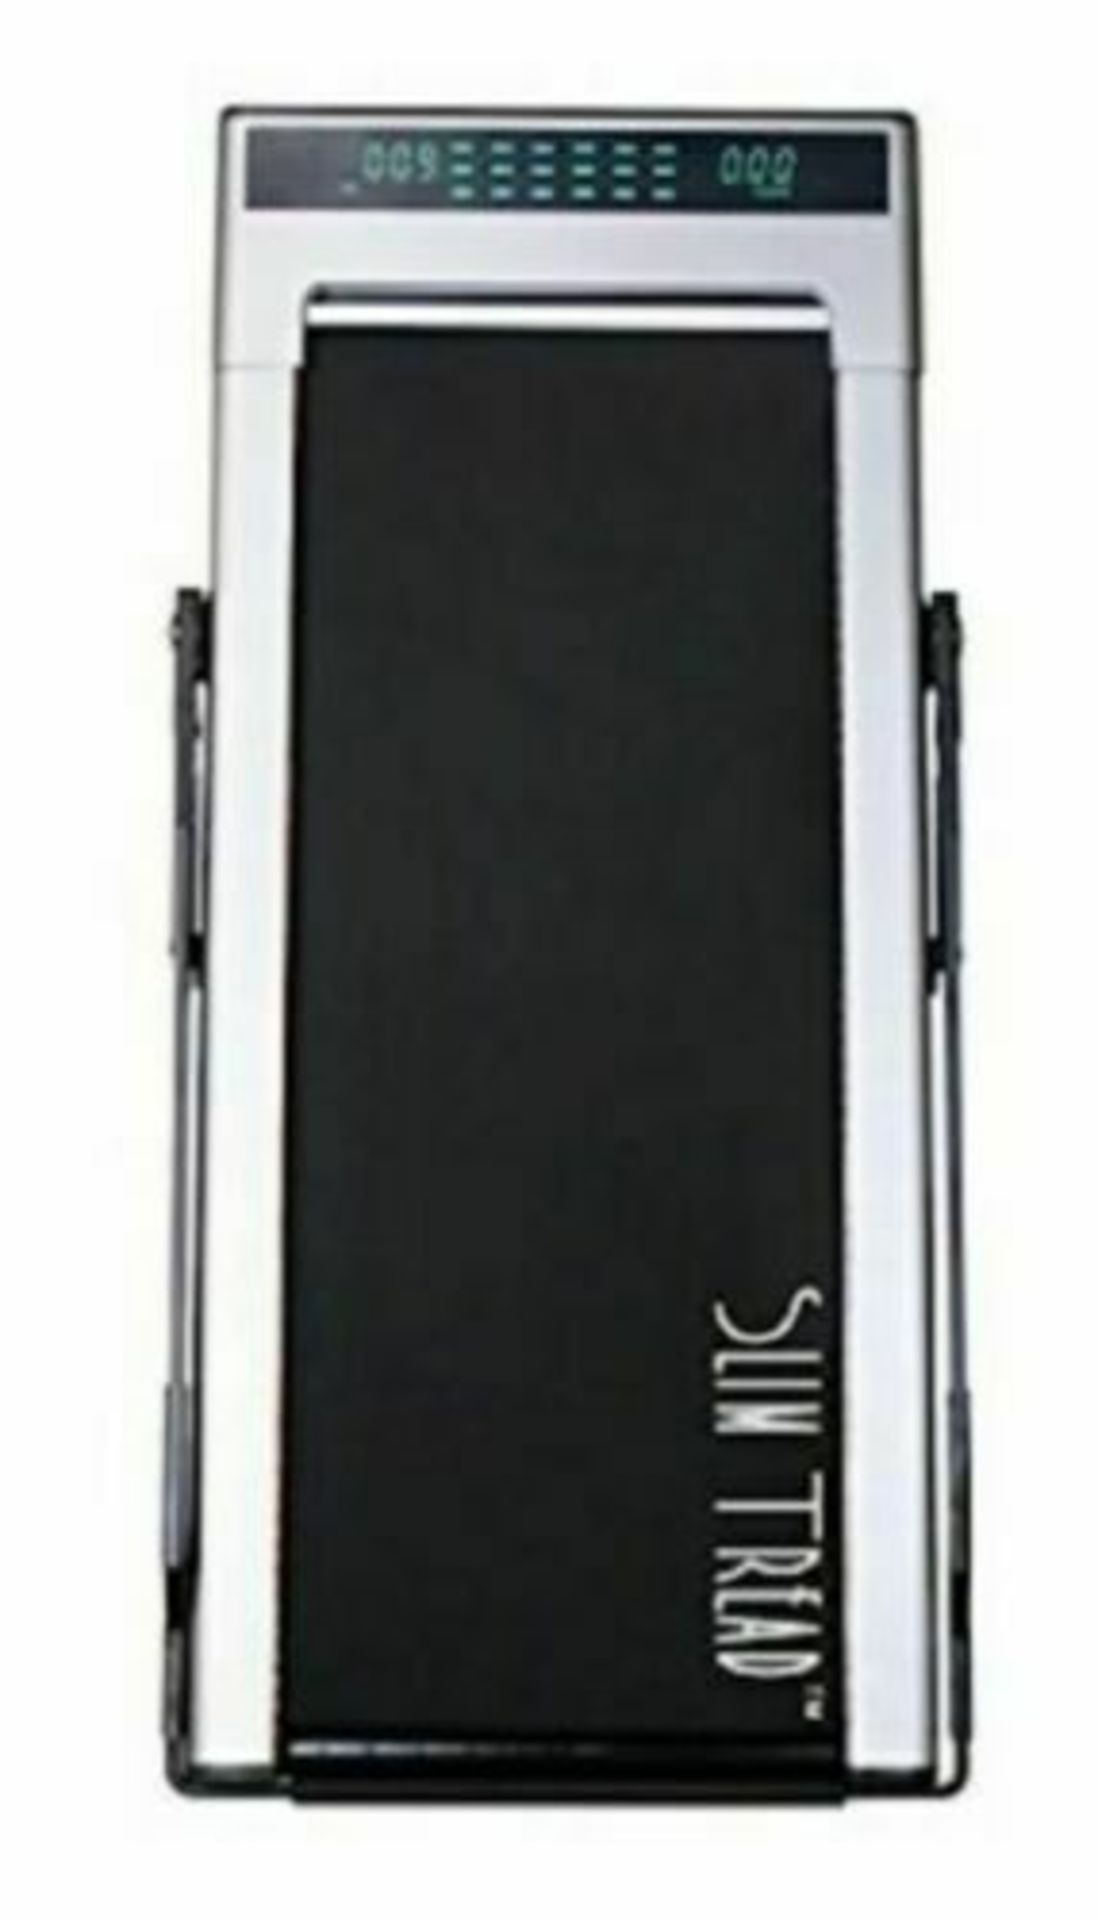 SLIM TREAD ULTRA SMART TREADMILL RUNNING / WALKING MACHINE - NEW, BOXED STOCK - RRP £799 - Image 9 of 11